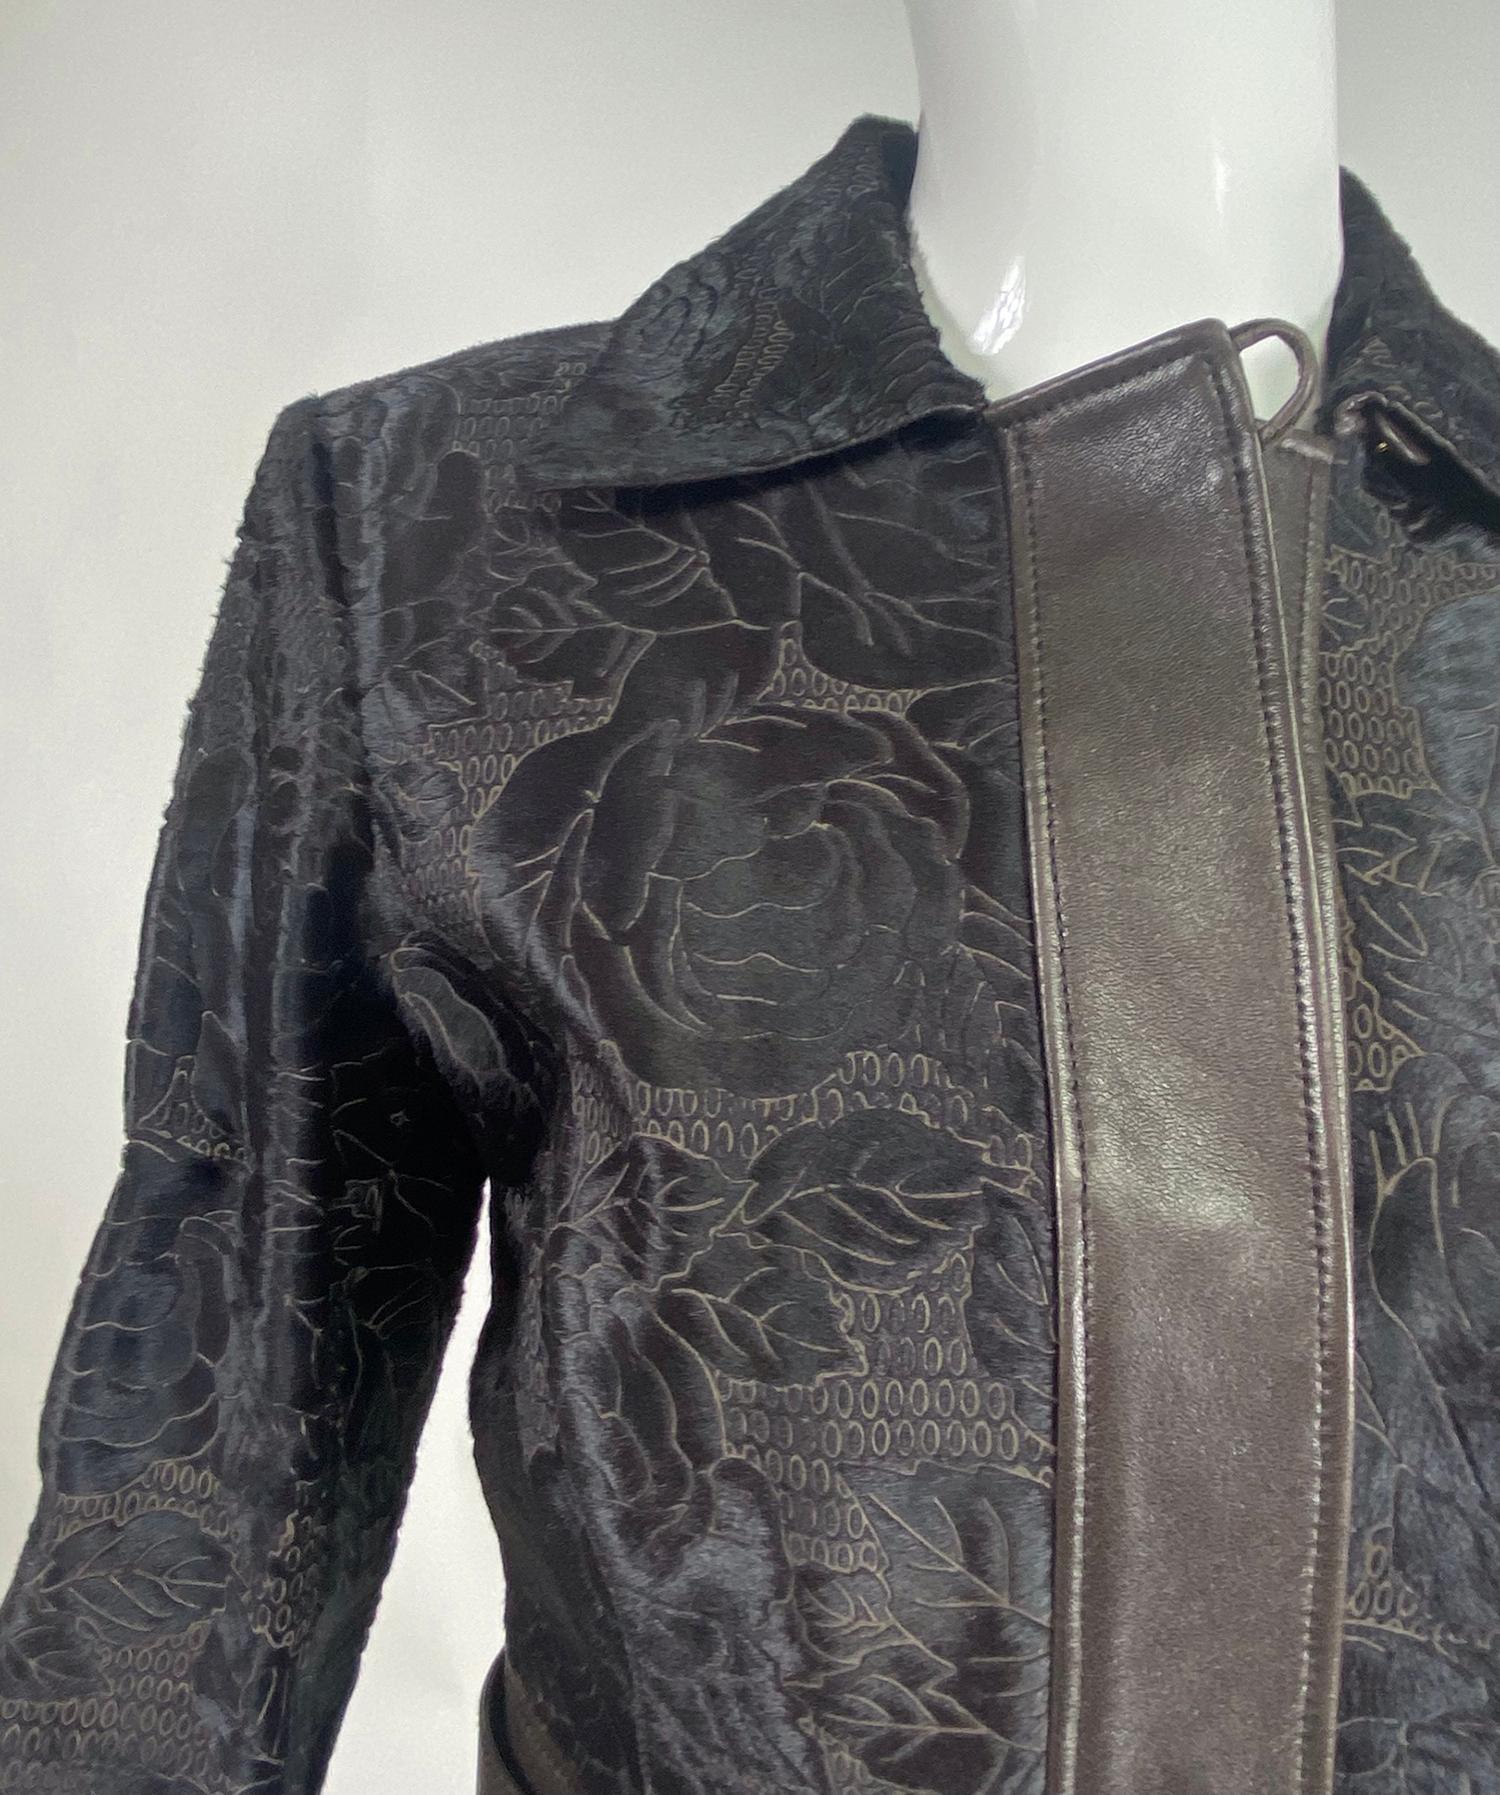 Giorgio Armani Sheared Lamb with Leather Facings in Black & Brown Jacket 2